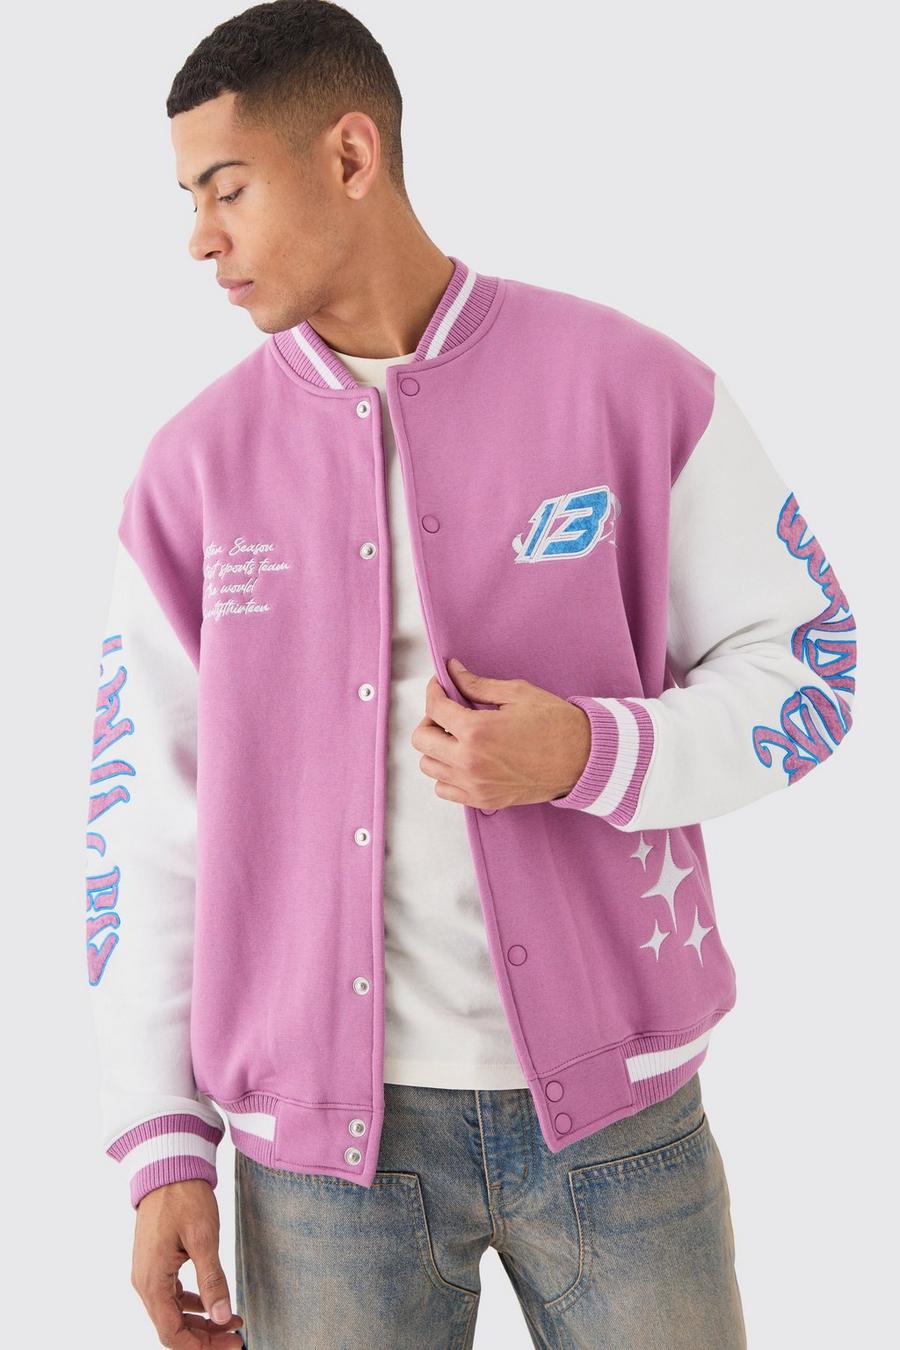 Pink Oversized Worldwide Applique Jersey sweater Jacket